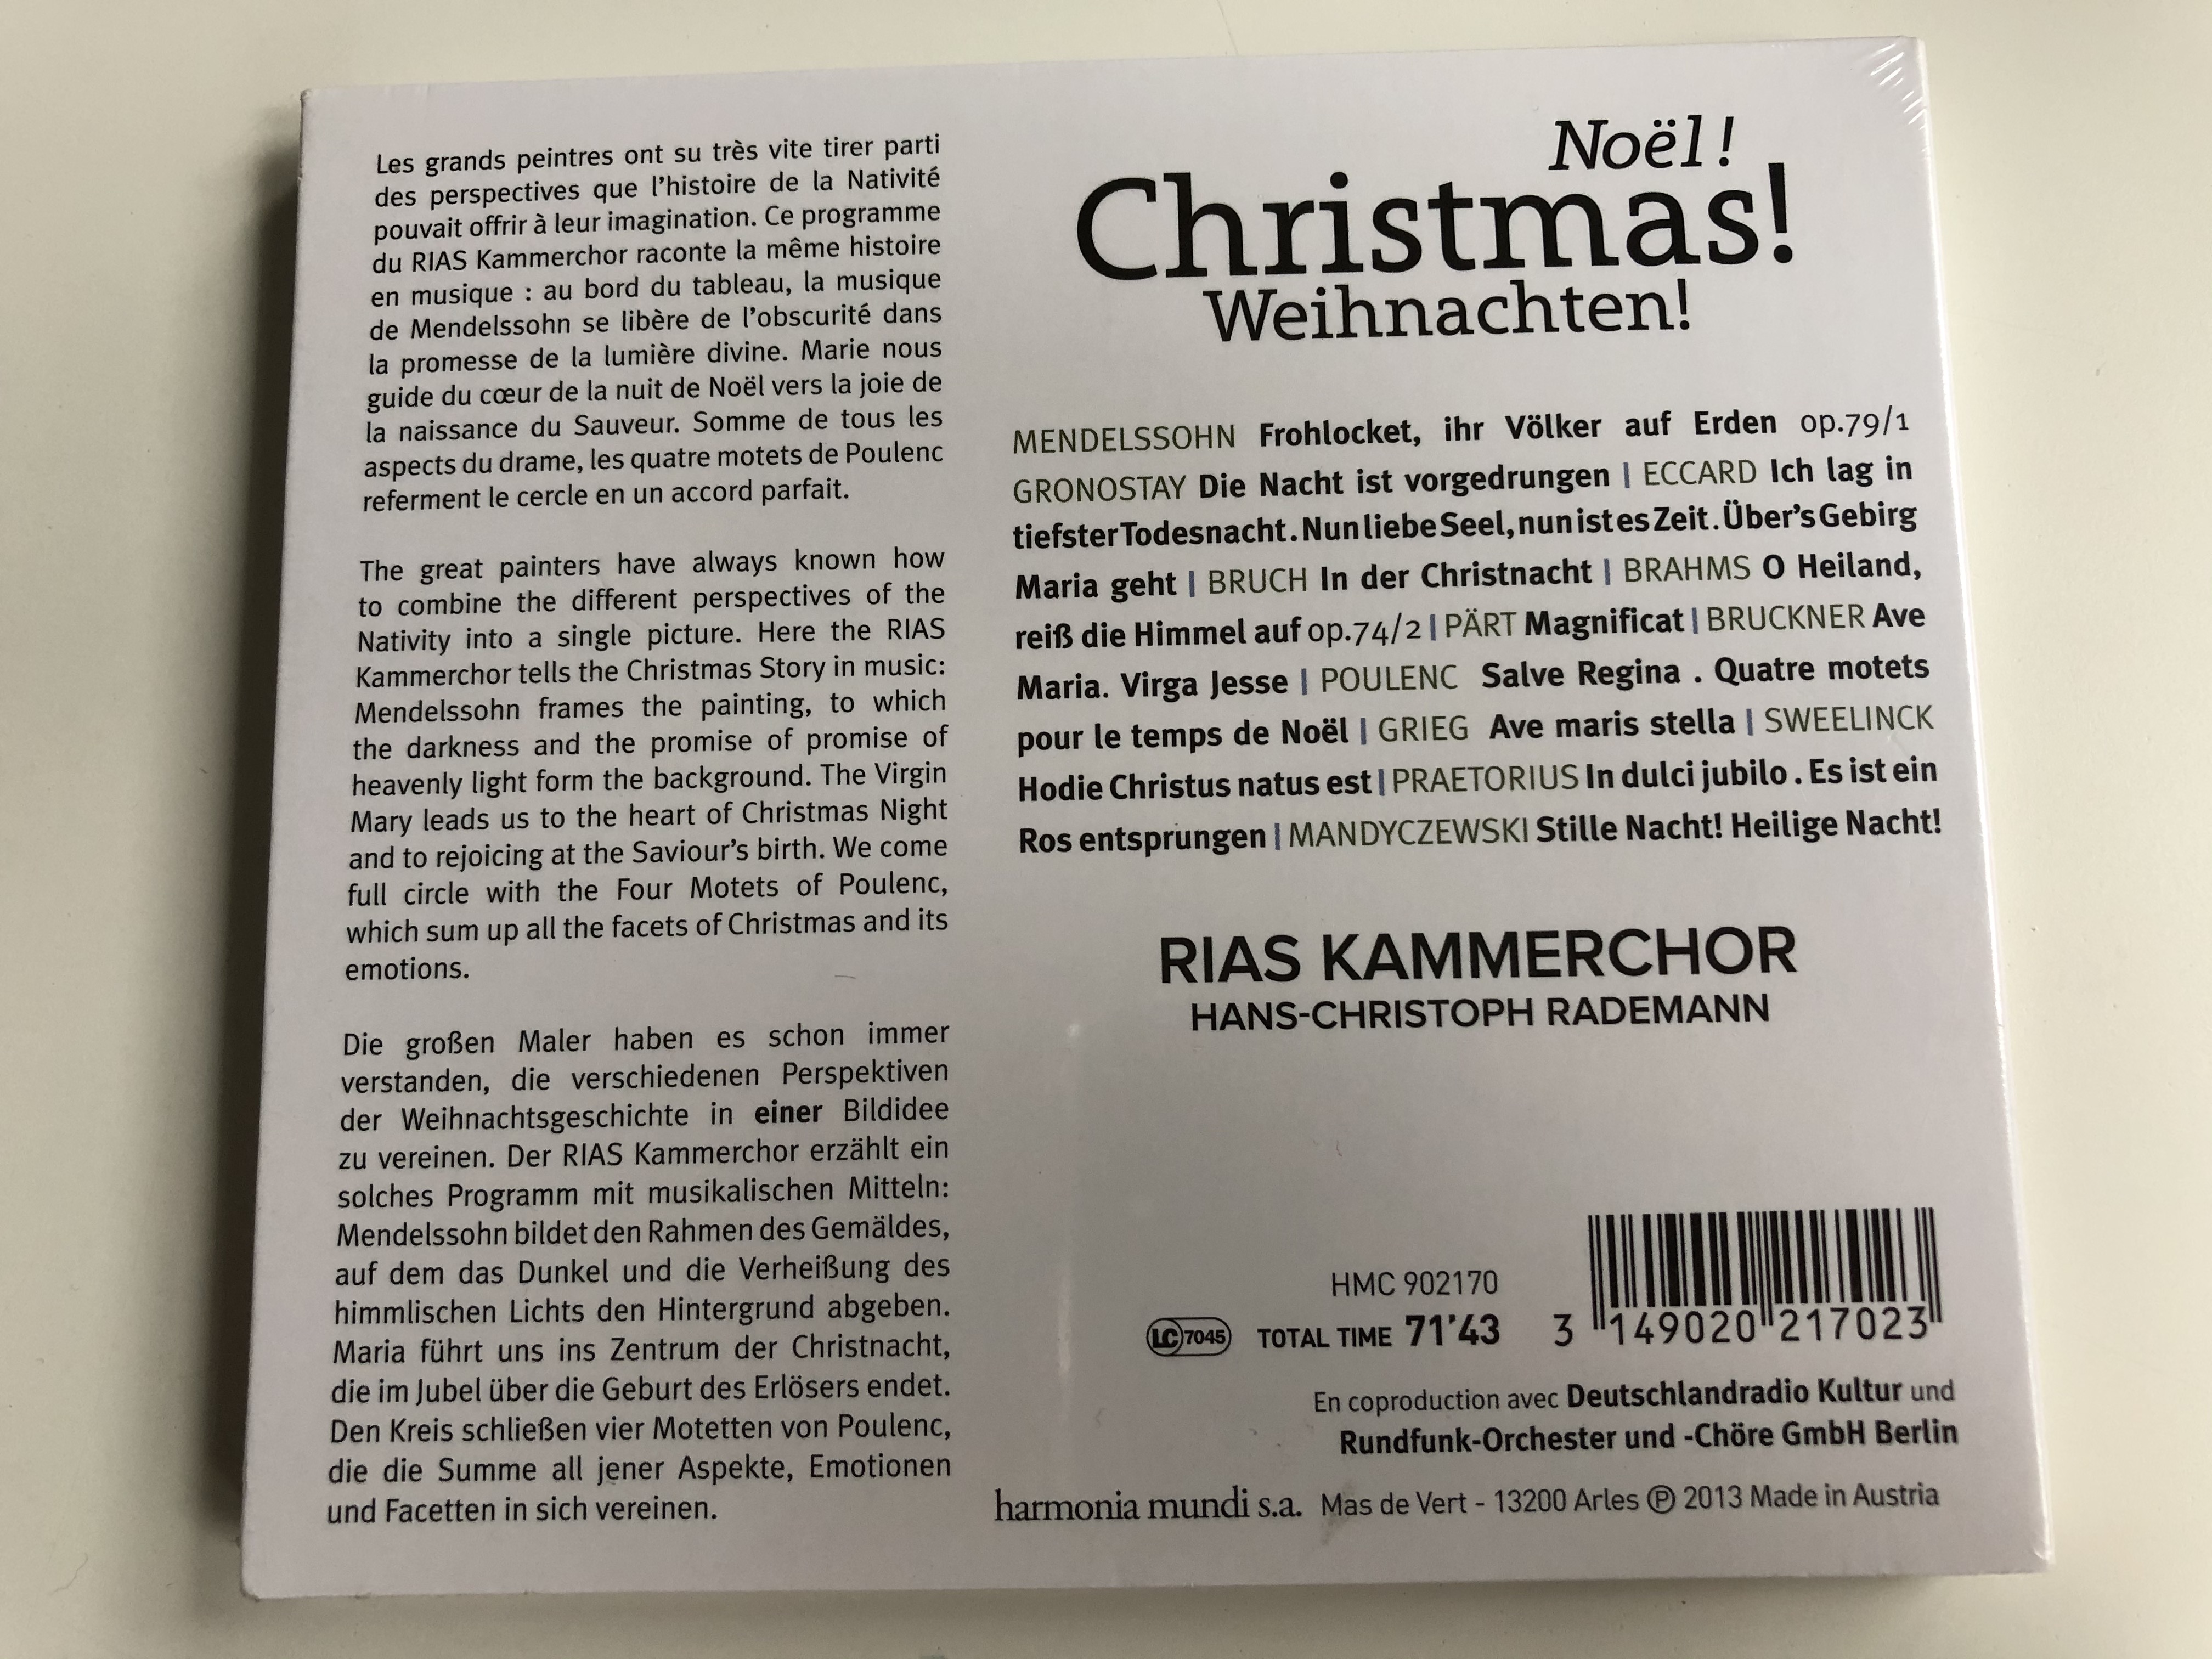 rias-kammerchor-no-l-christmas-weihnachten-hans-christoph-rademann-harmonia-mundi-audio-cd-2013-hmc-902170-2-.jpg